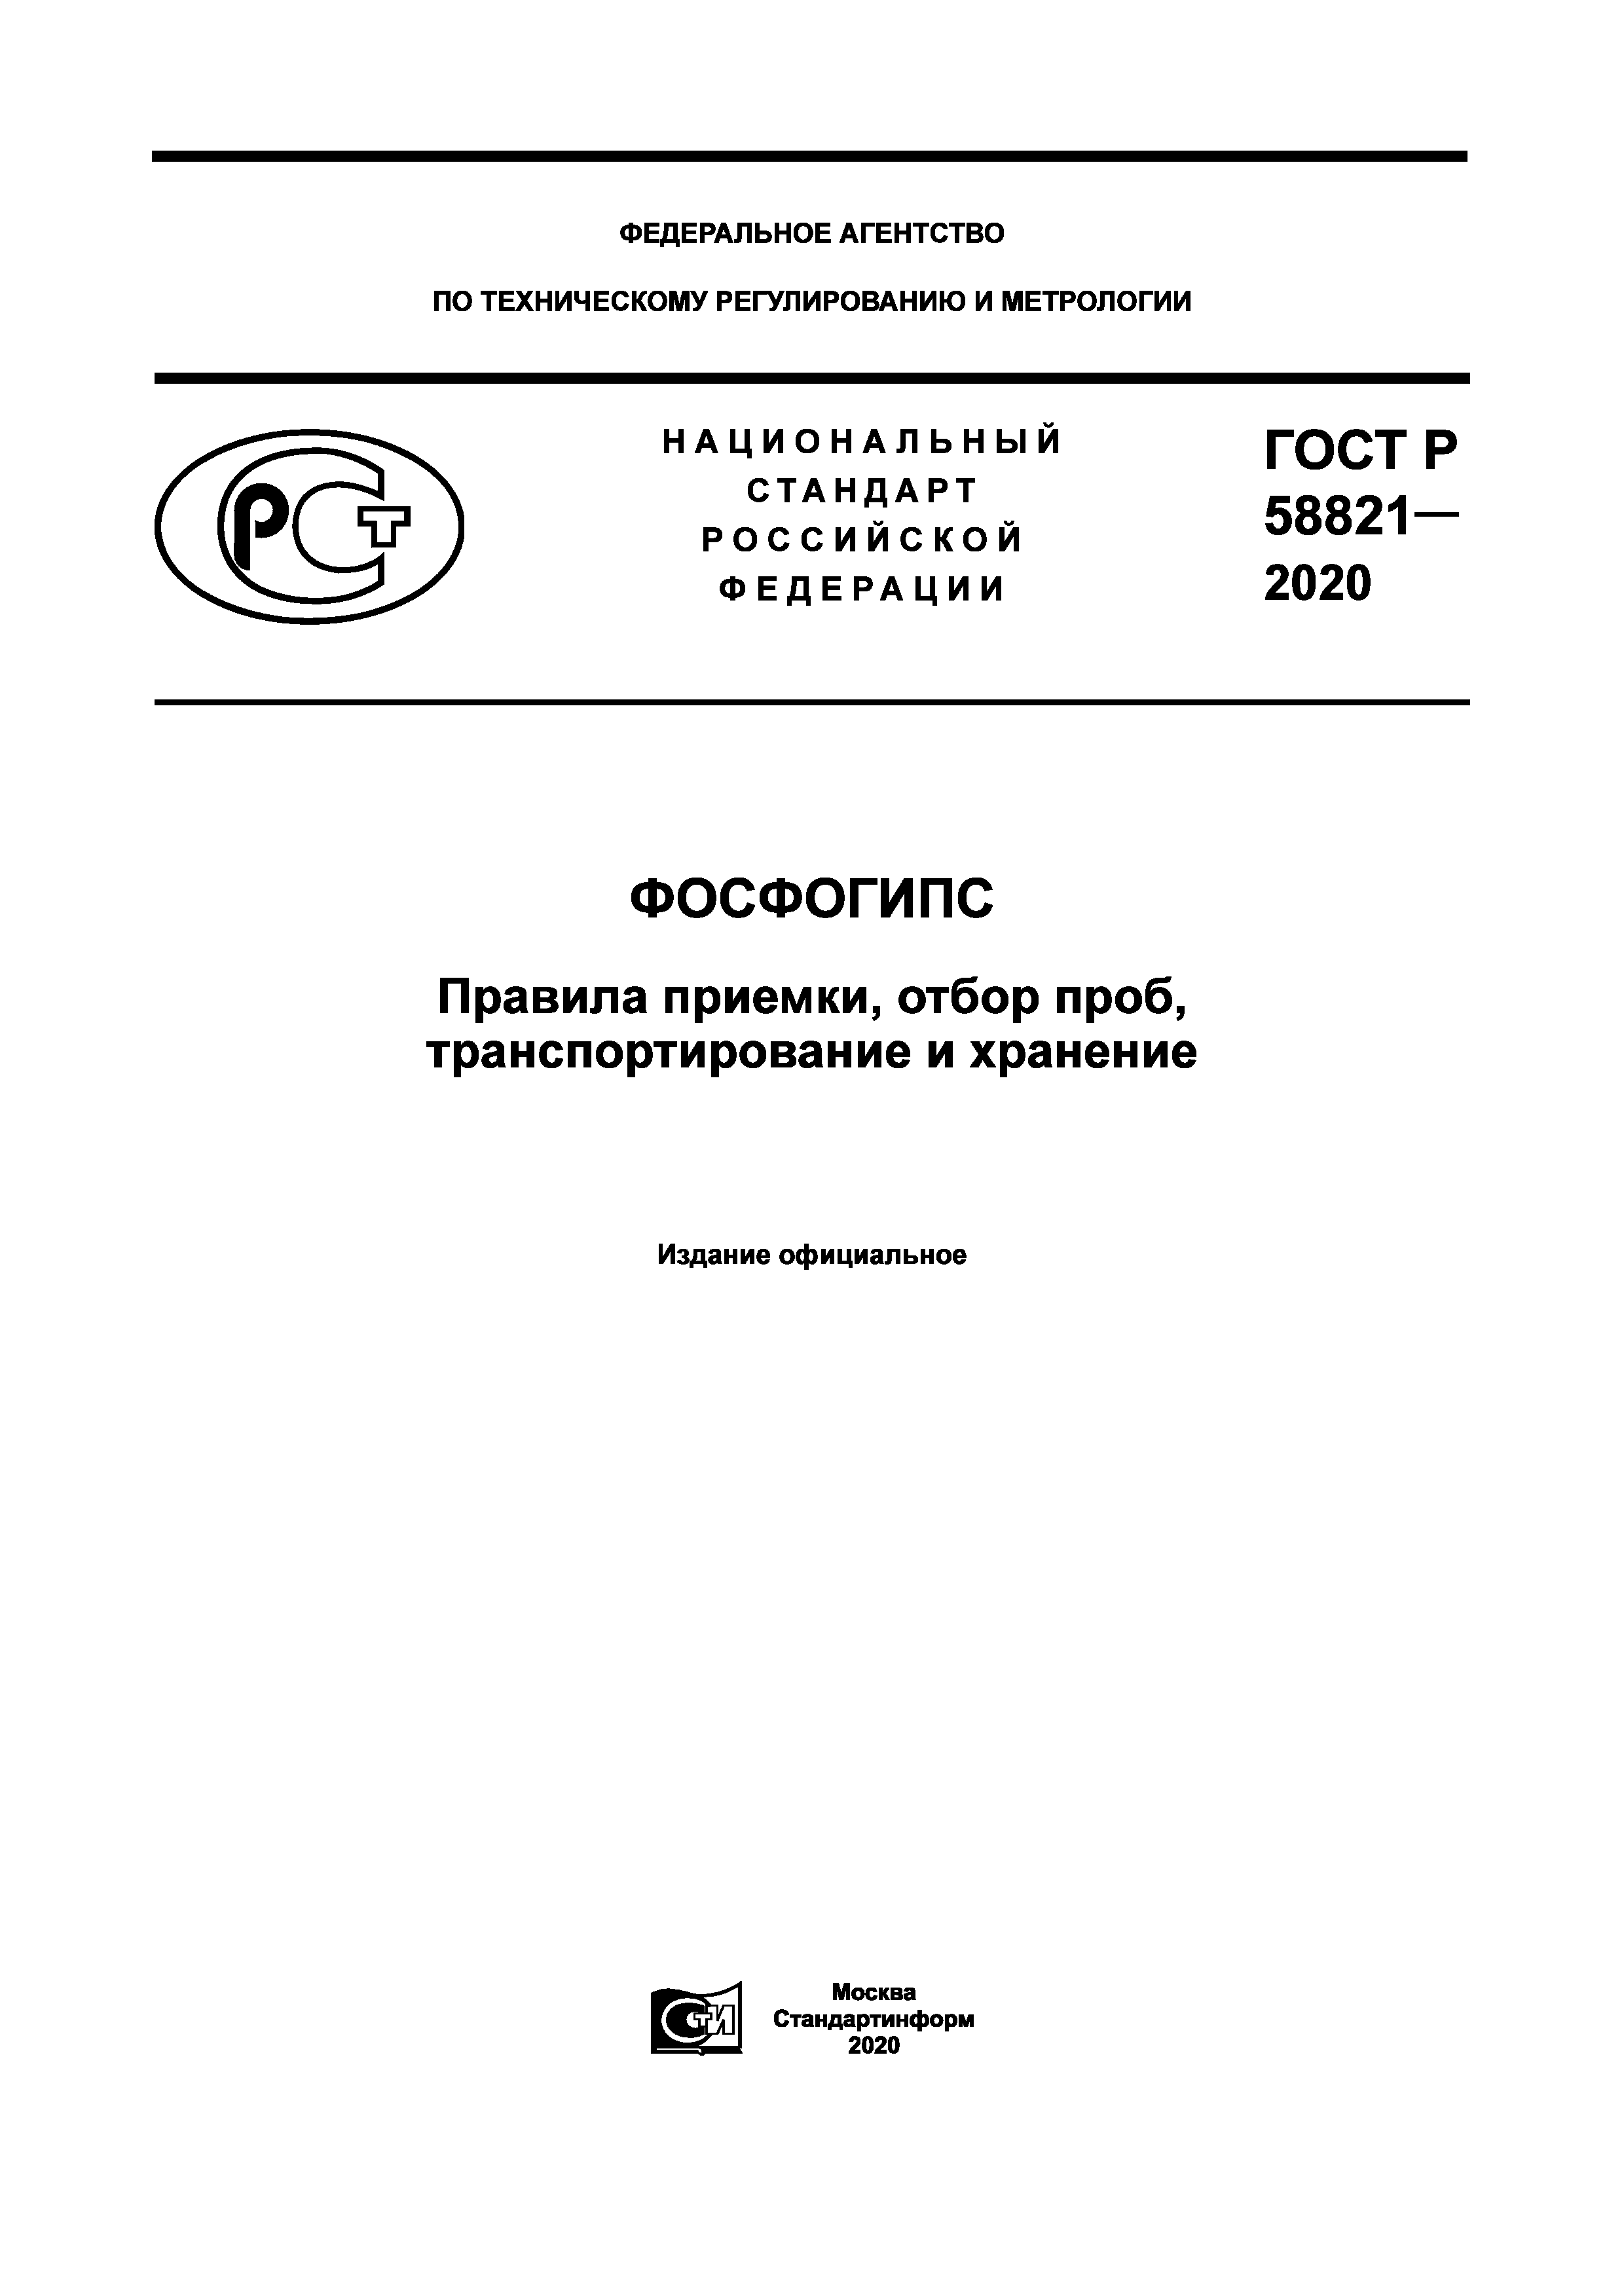 ГОСТ Р 58821-2020